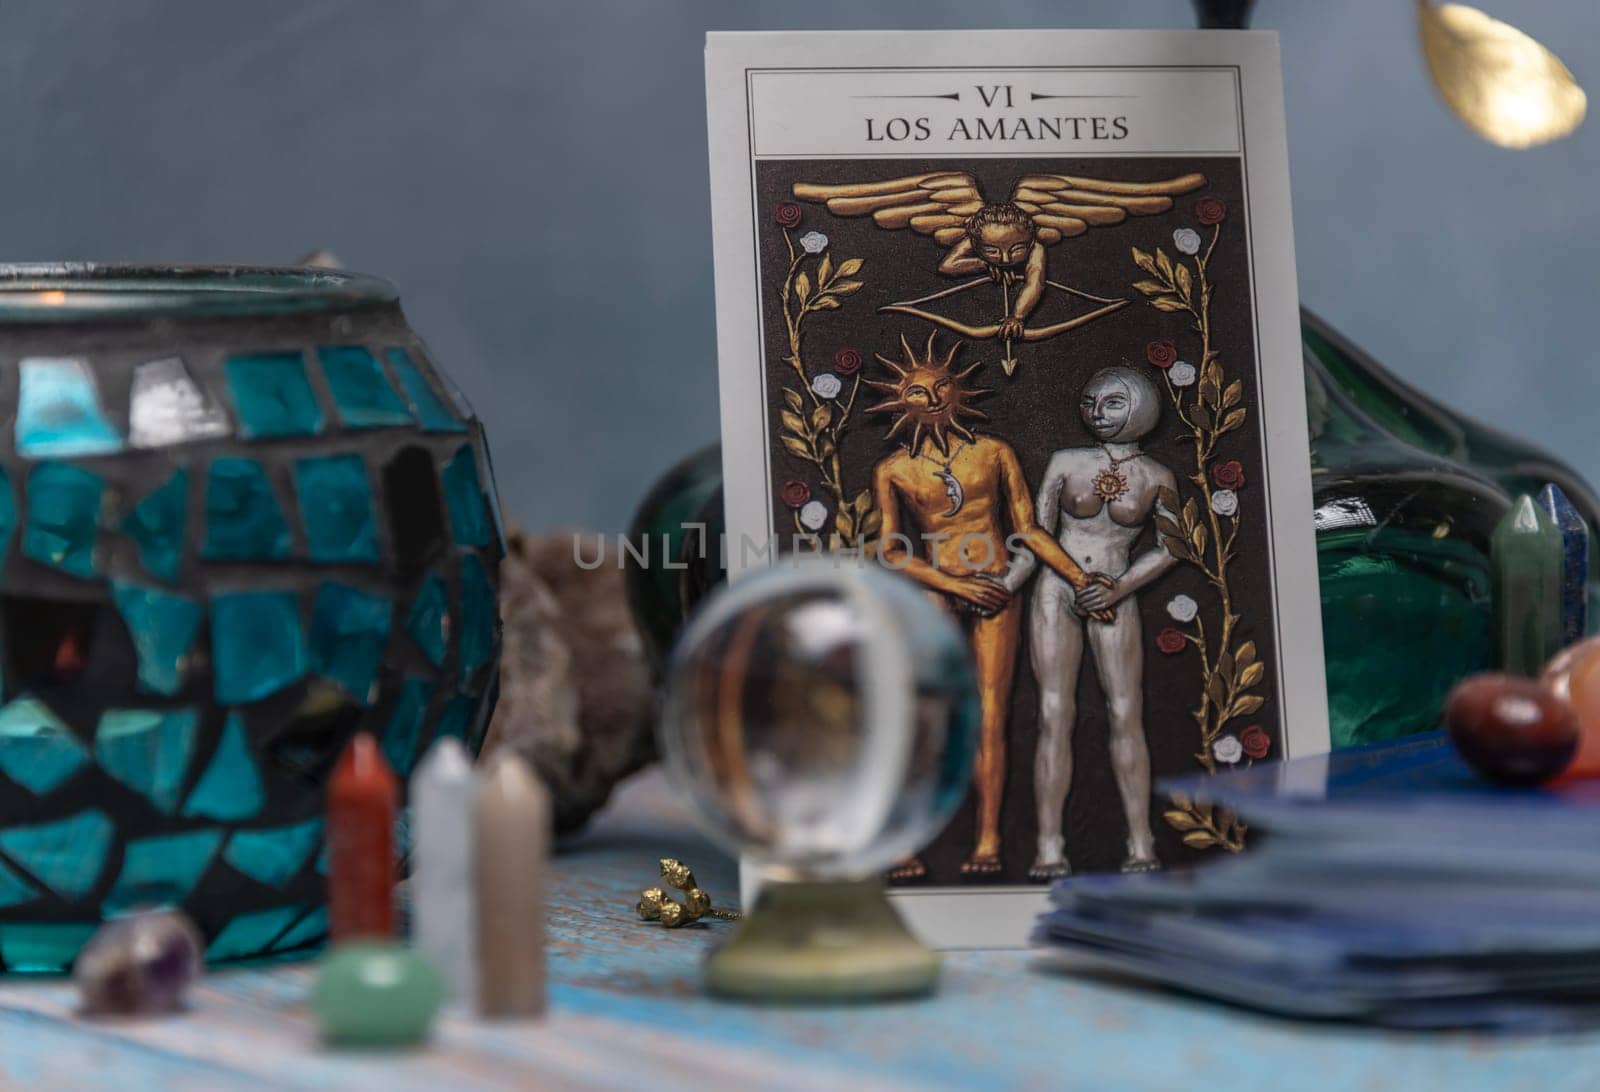 Cartomancy - Pendulum On Blurred Altar With Defocused Tarot Cards. by jbruiz78